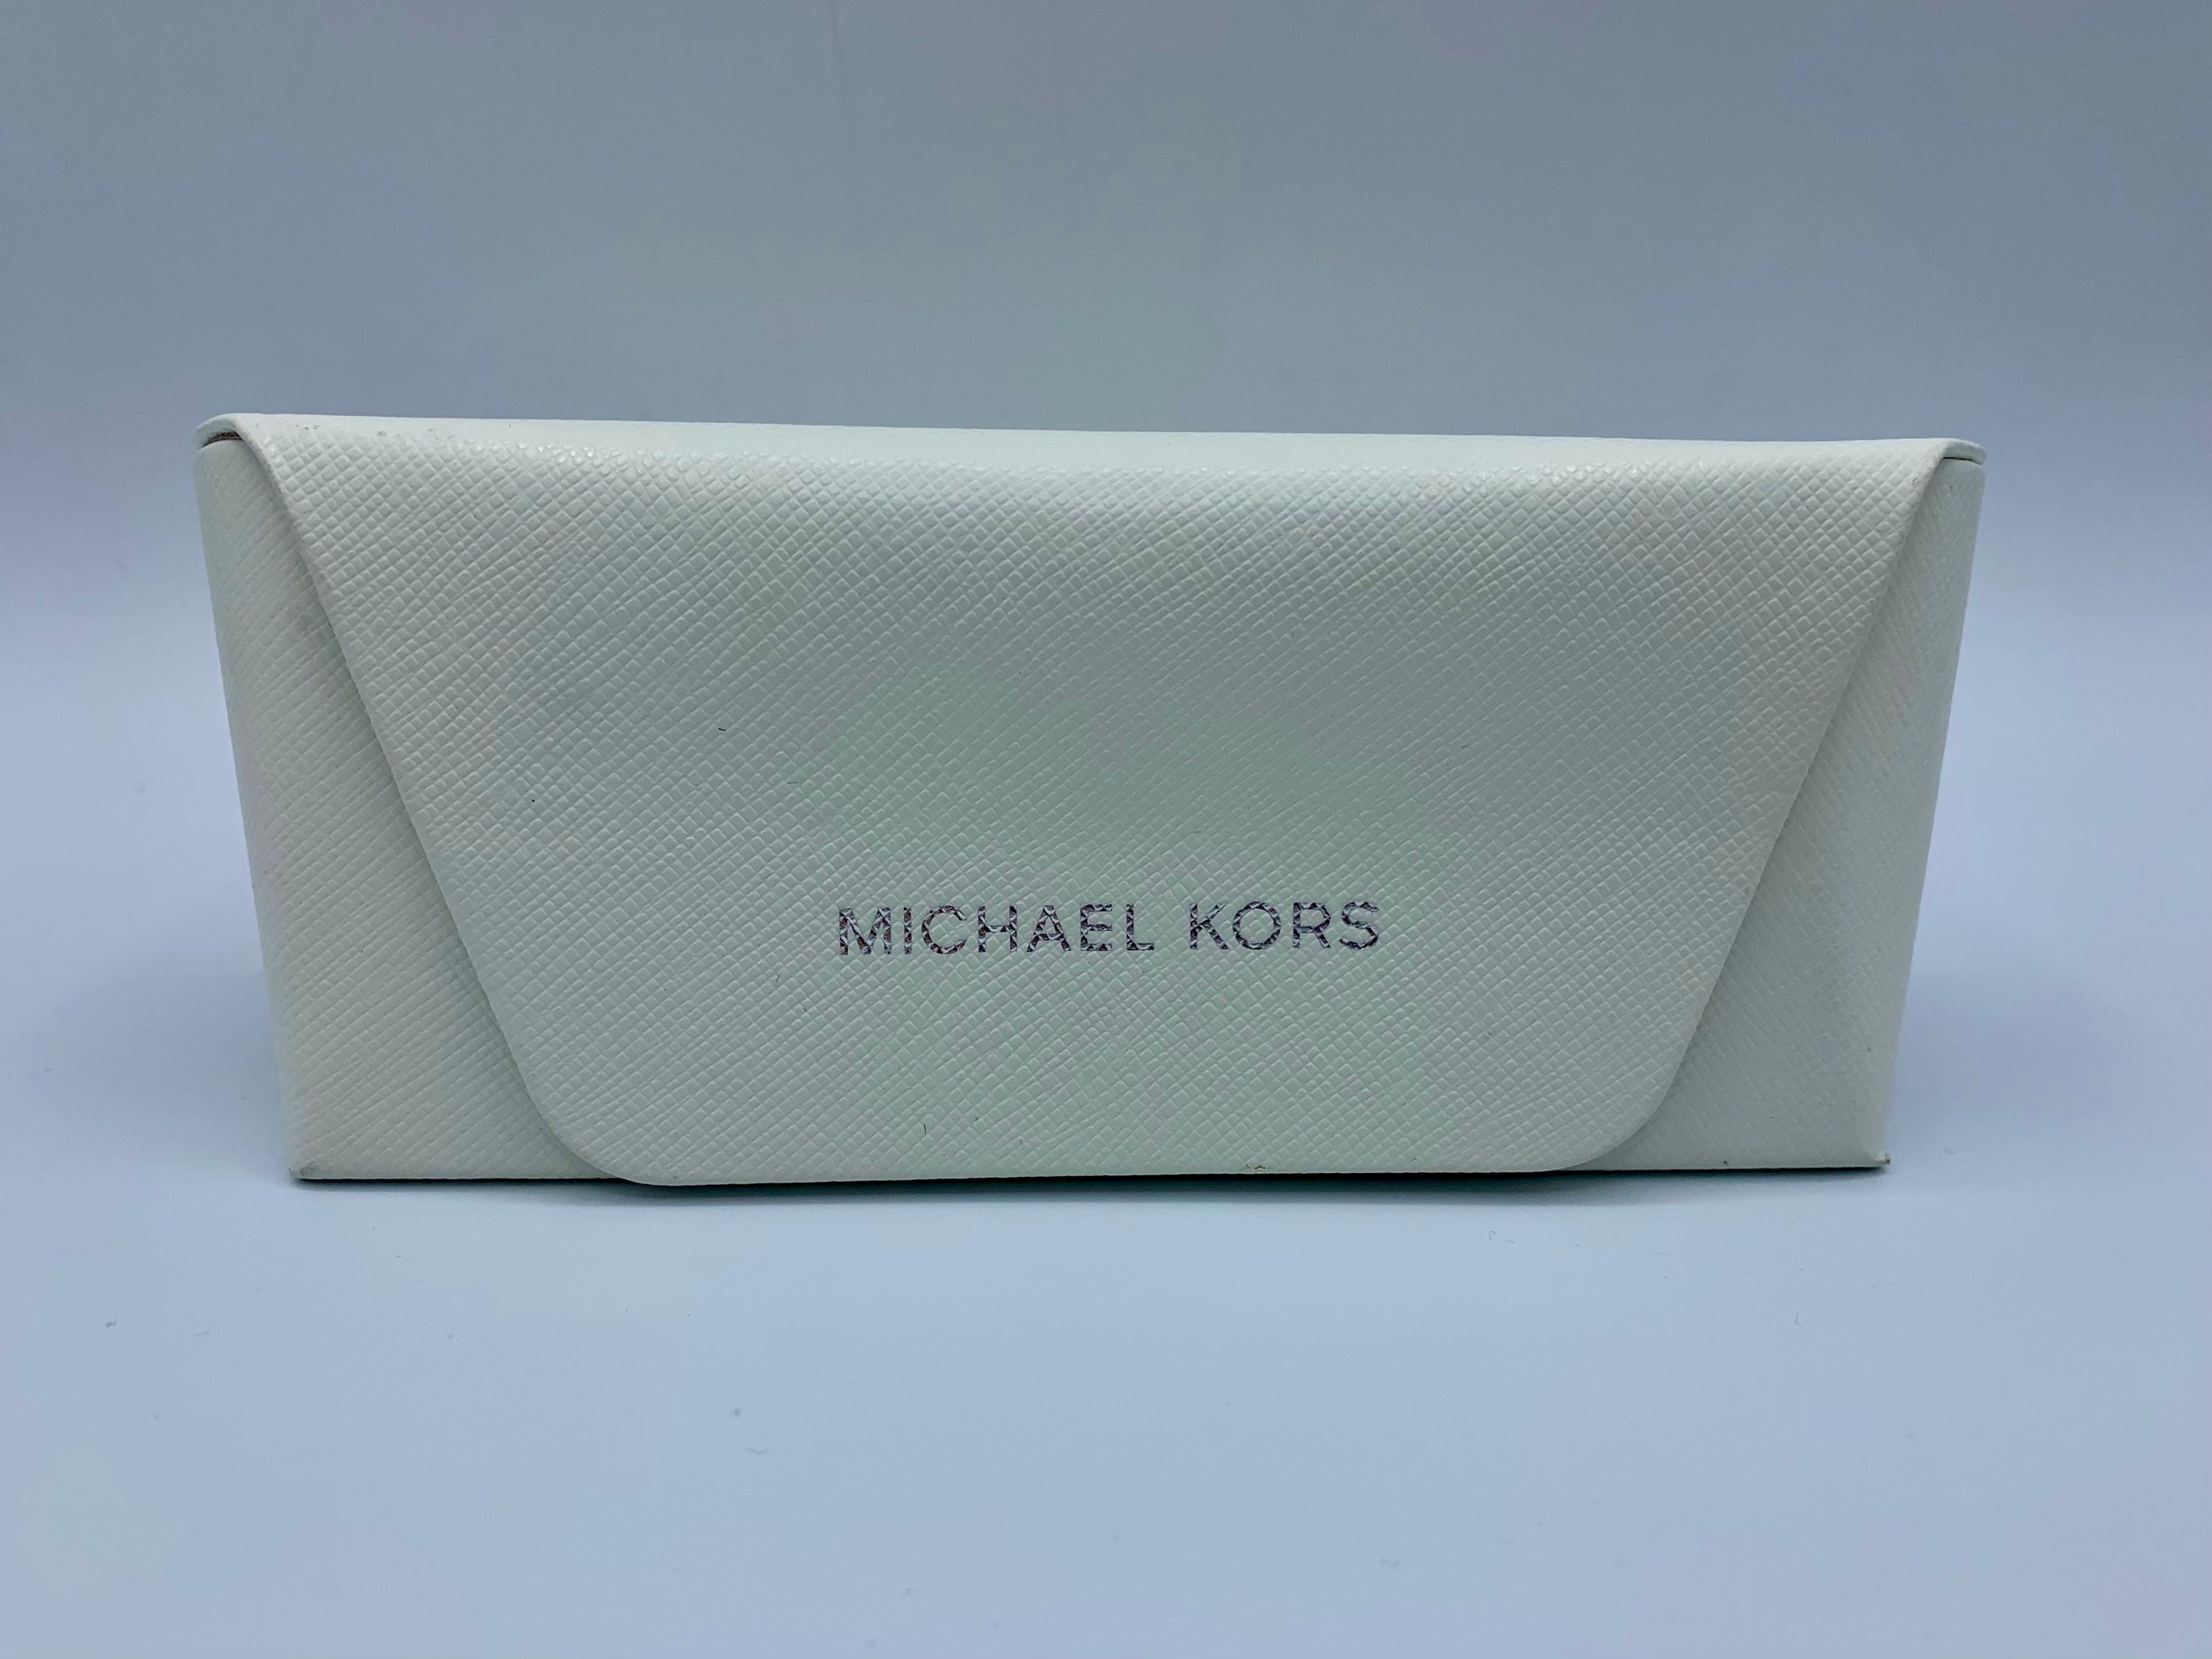 Ivory Sleeveless Sweater  Michael kors handbags outlet, Michael